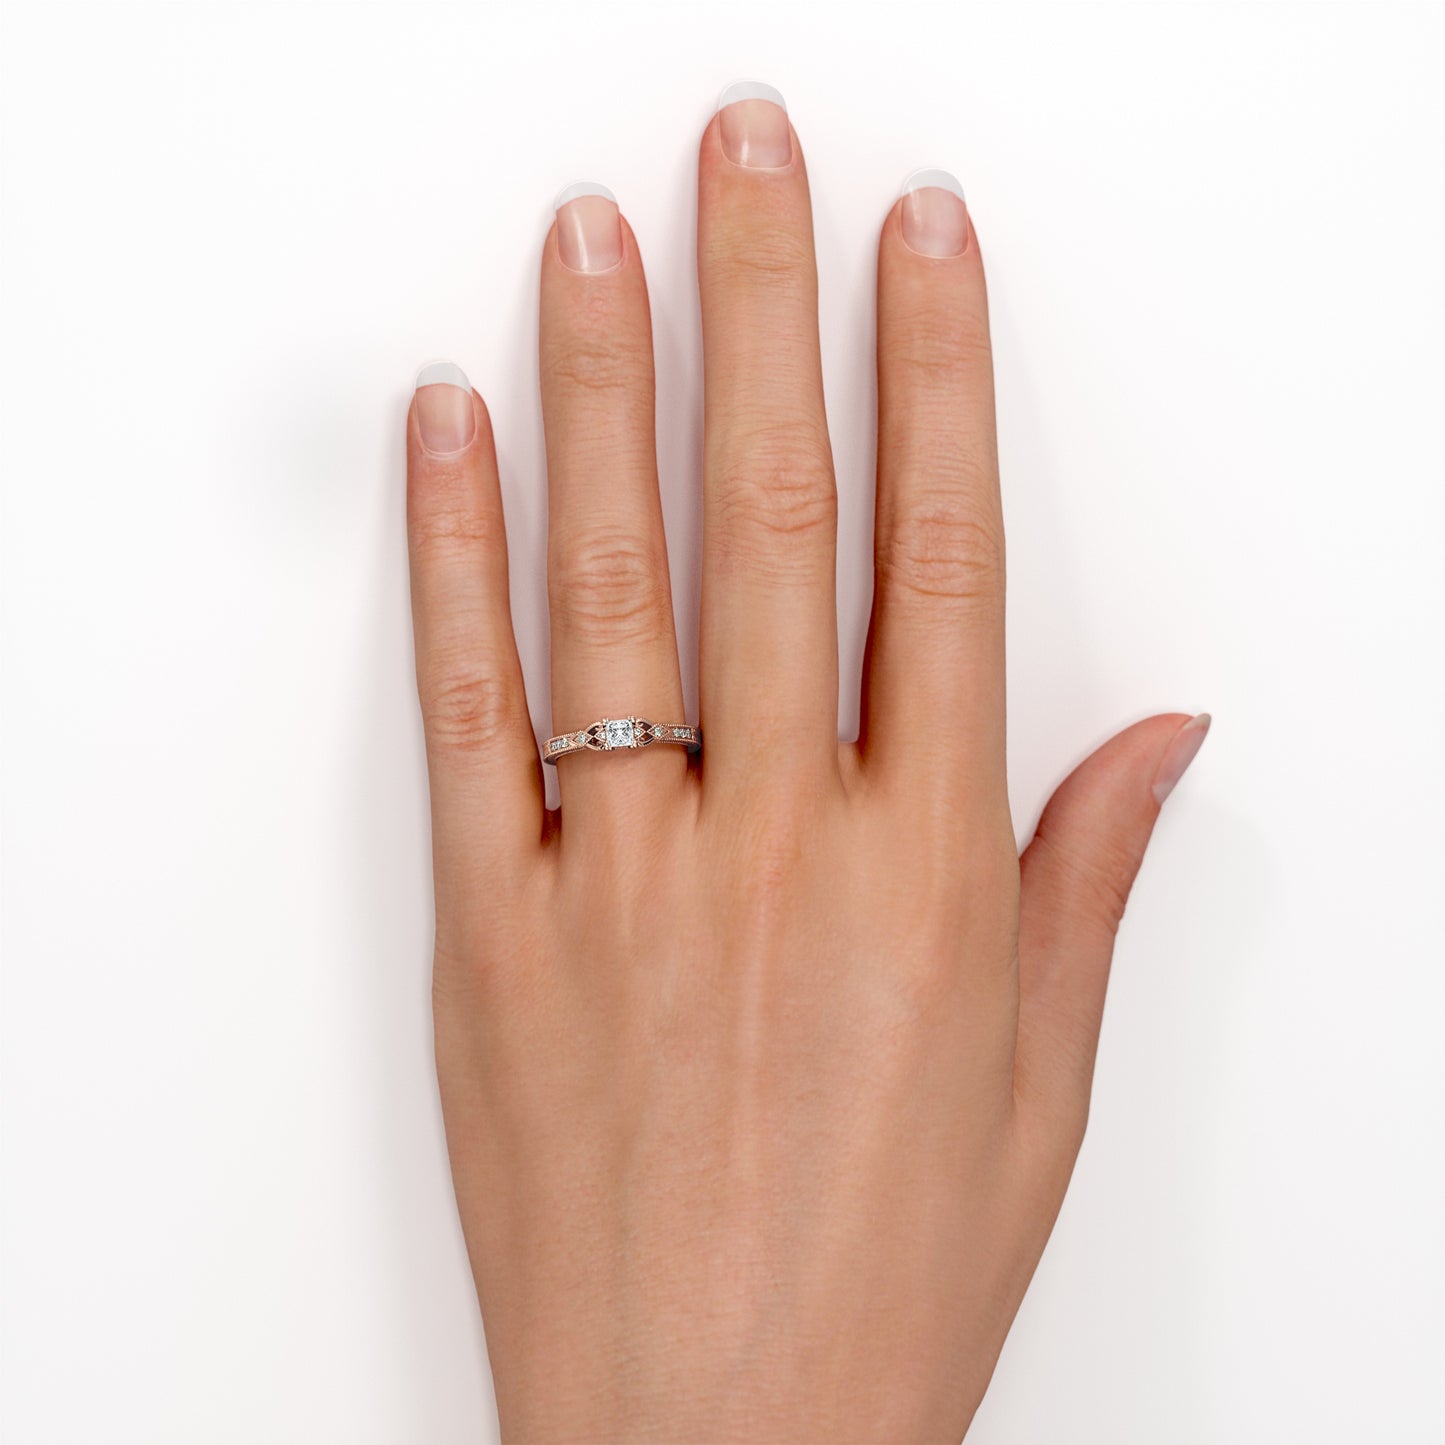 Edwardian Filigree and Milgrain 0.5 carat Princess cut diamond intricate halo engagement ring for women in White gold